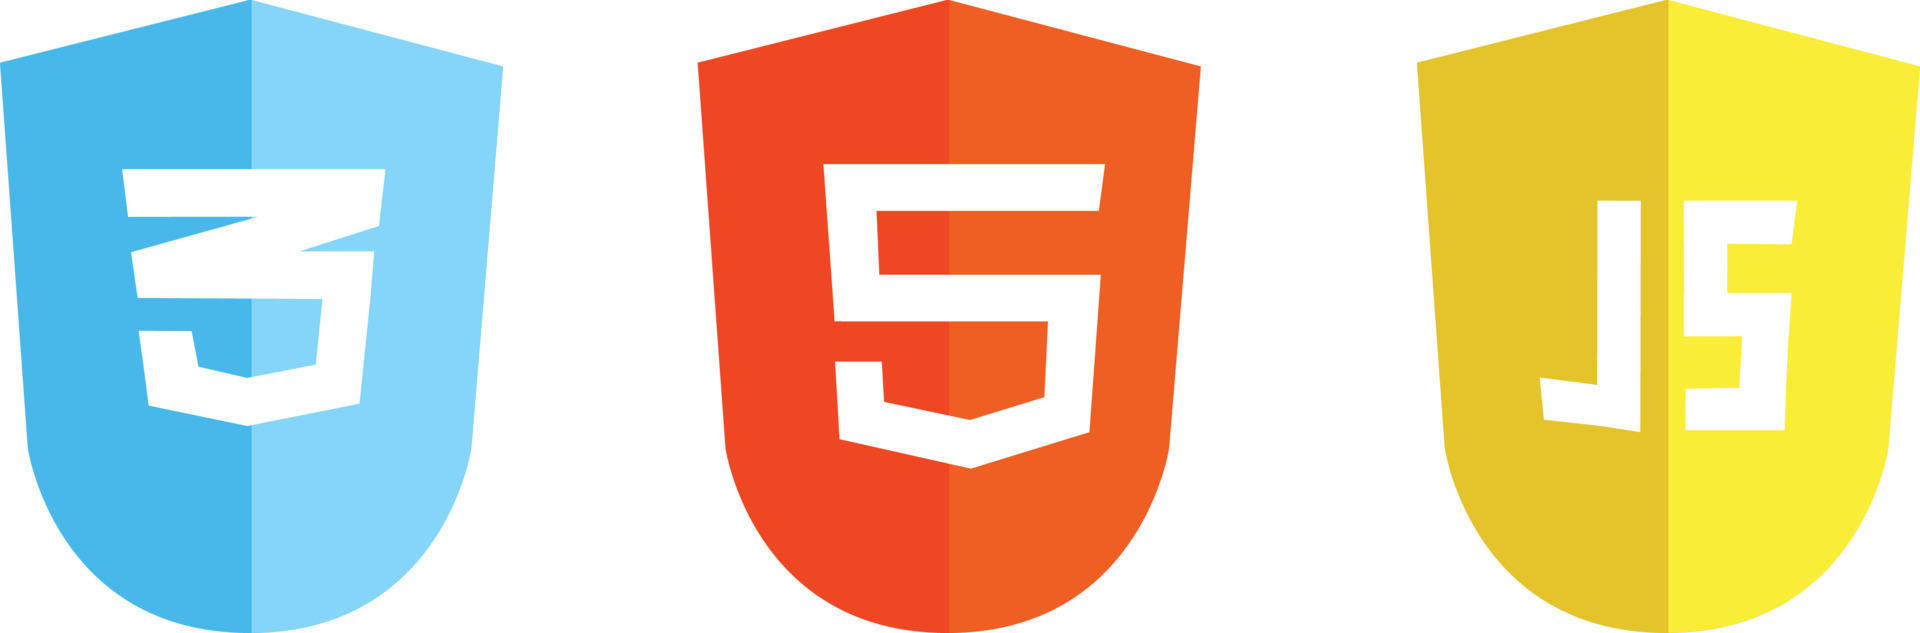 HTML5 CSS3 JS icon set. Web development logo icon set of html, css ...